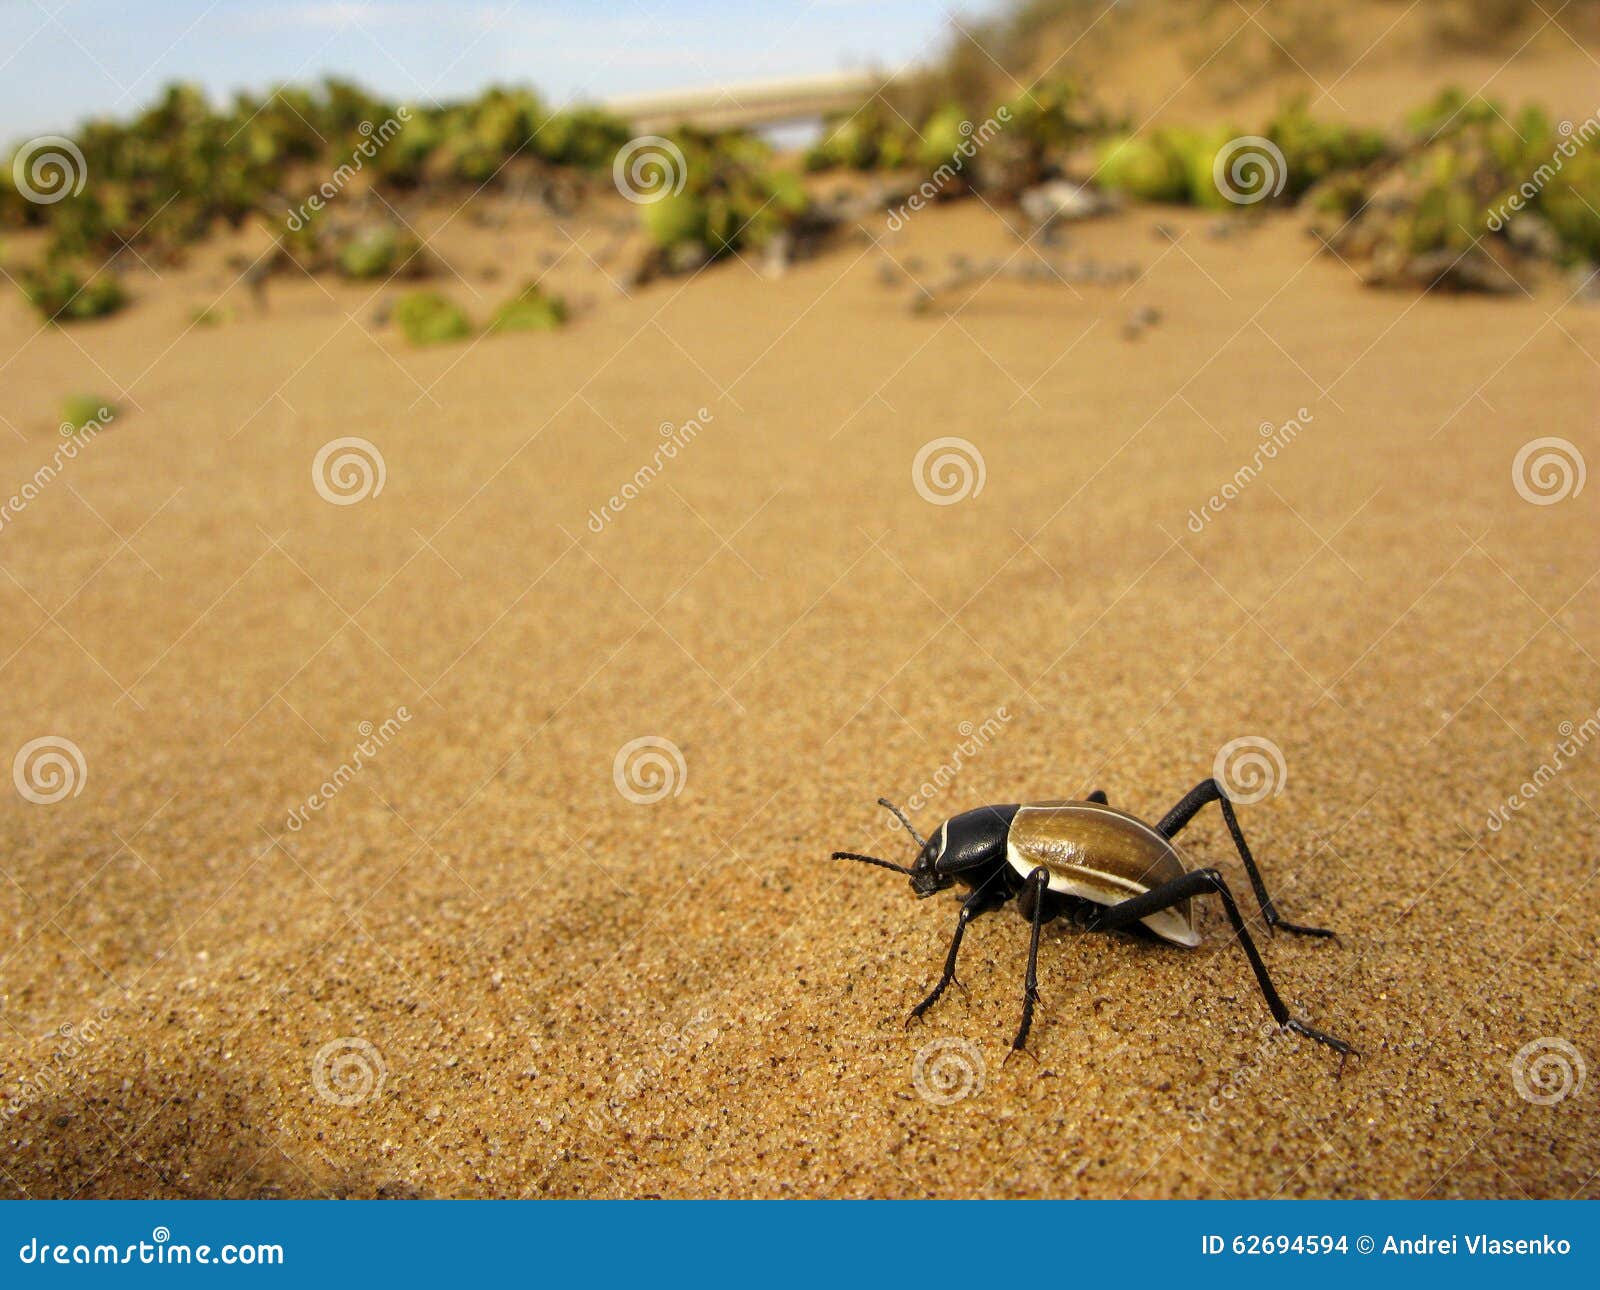 tok-tokkie darkling beetle (onymacris sp.) on sand of namib desert in namibia, south africa